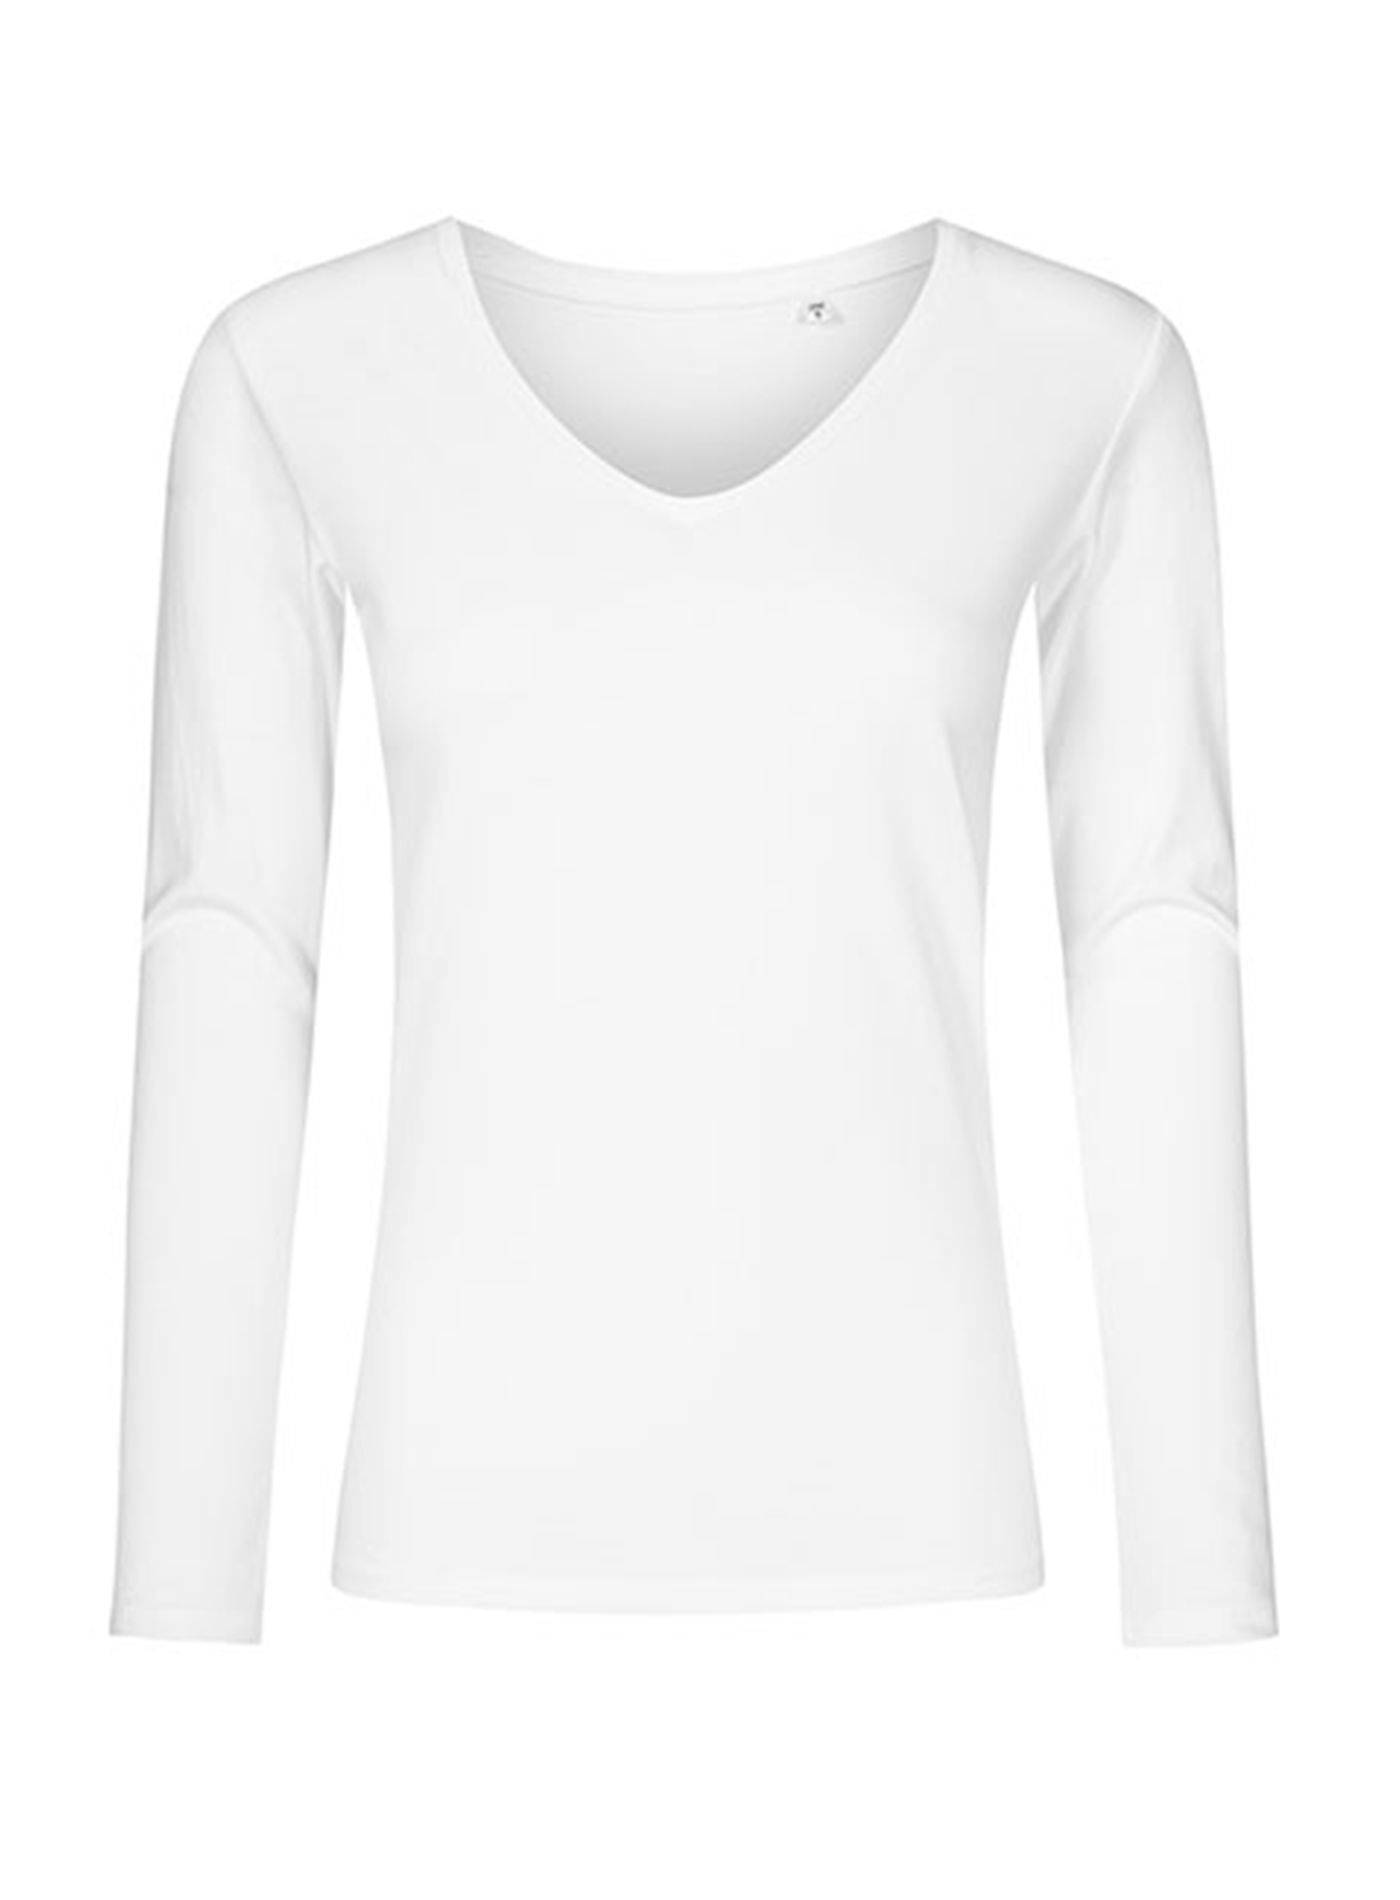 Dámské tričko s dlouhým rukávem a výstřihem do V Promodoro - Bílá M